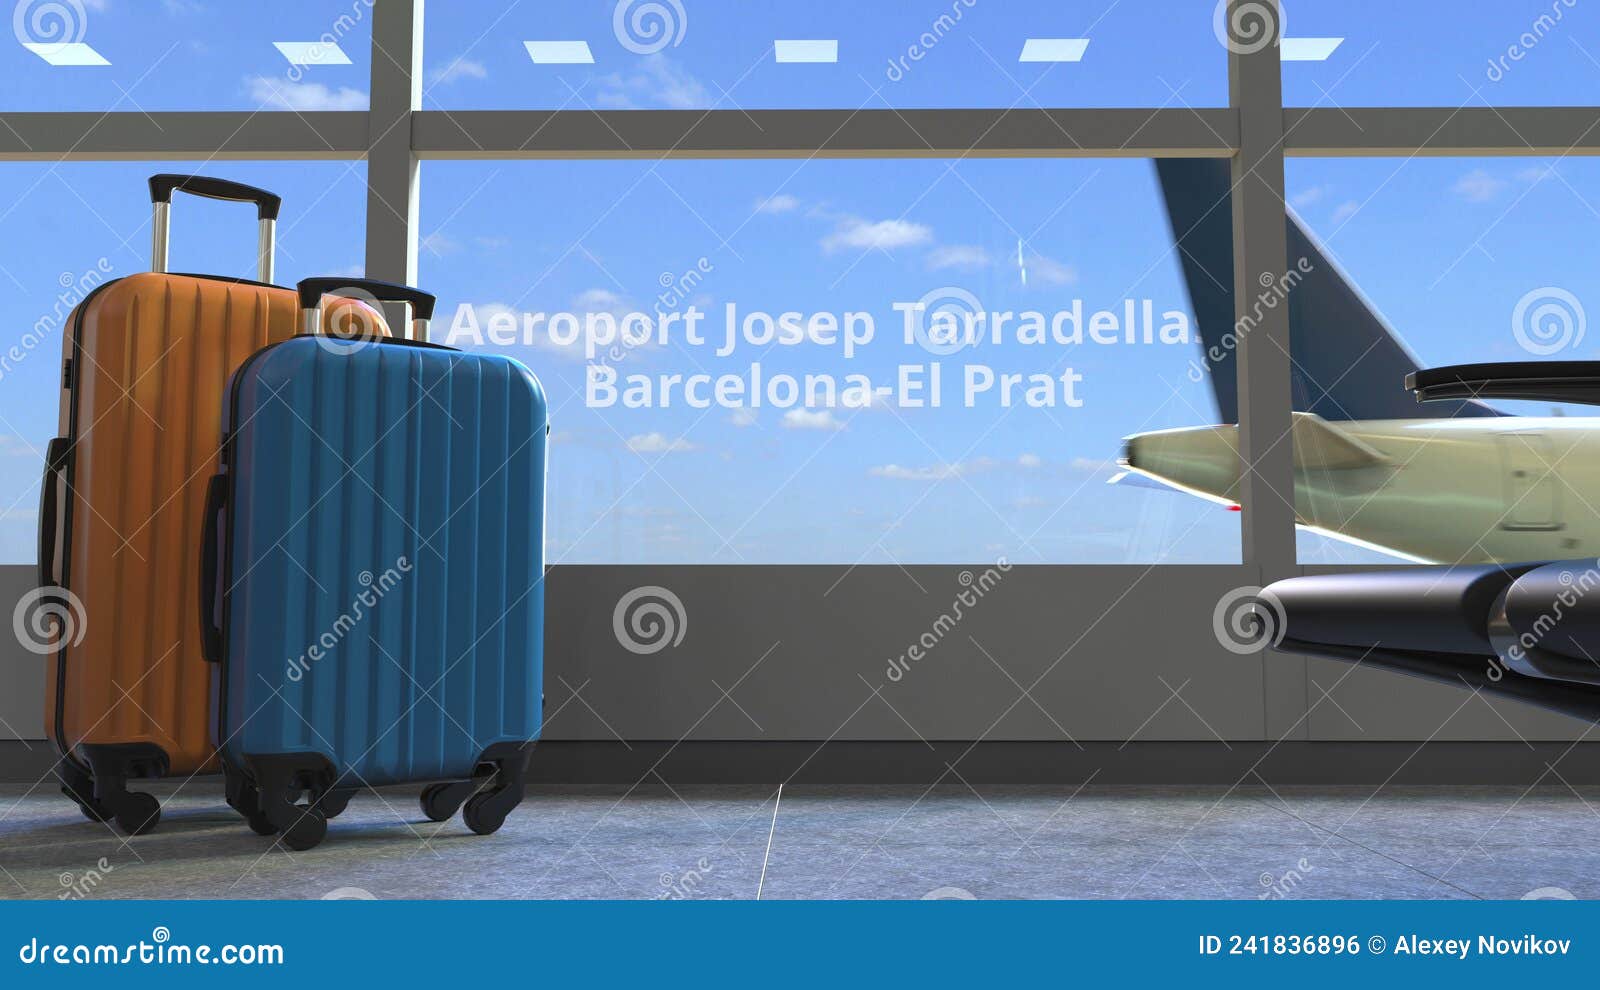 airliner revealing aeroport josep tarradellas barcelona-el prat text in the window of terminal. 3d rendering